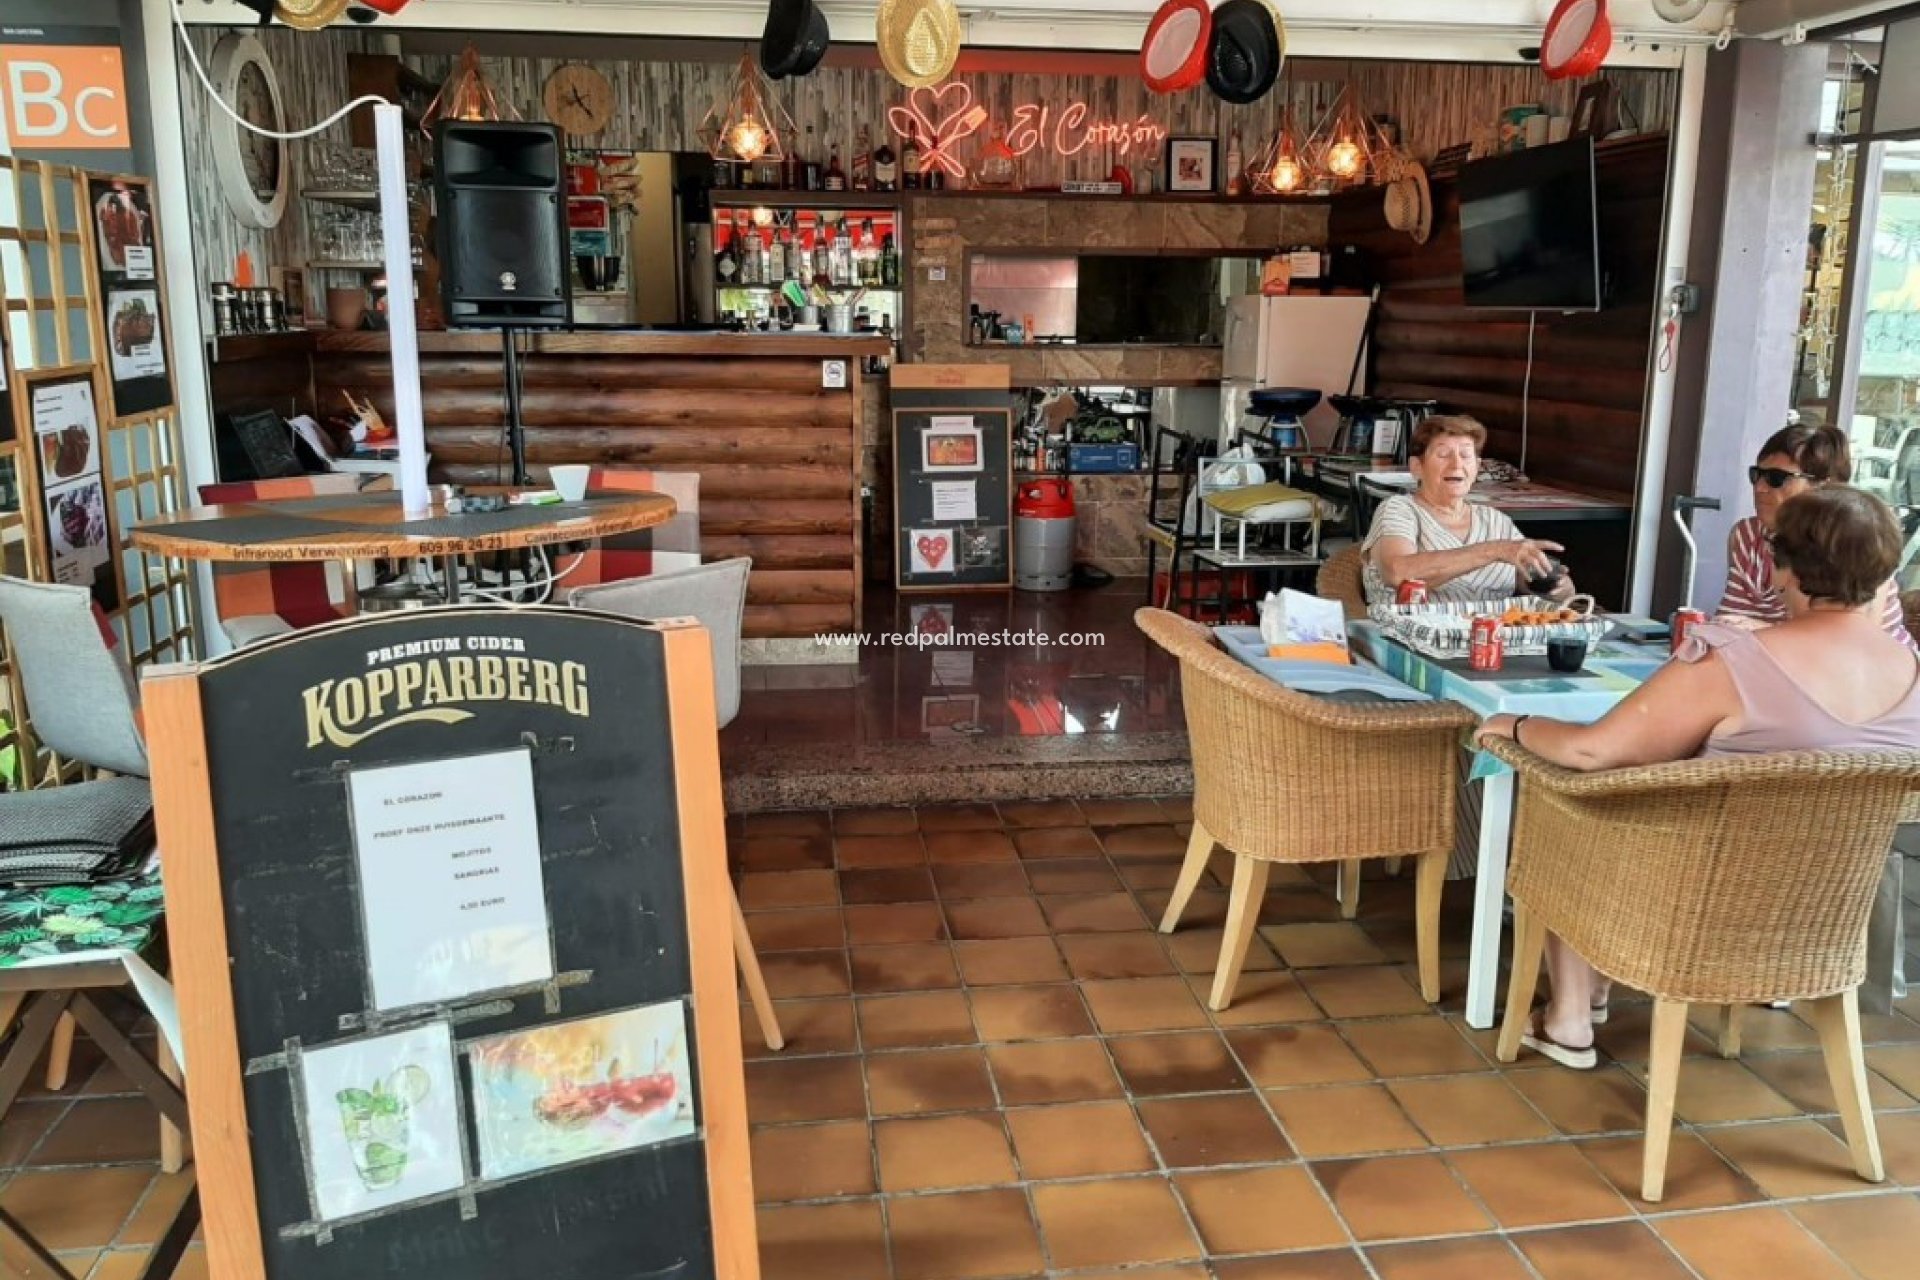 Reventa - Bares - Restaurantes -
Santa Cruz de Tenerife